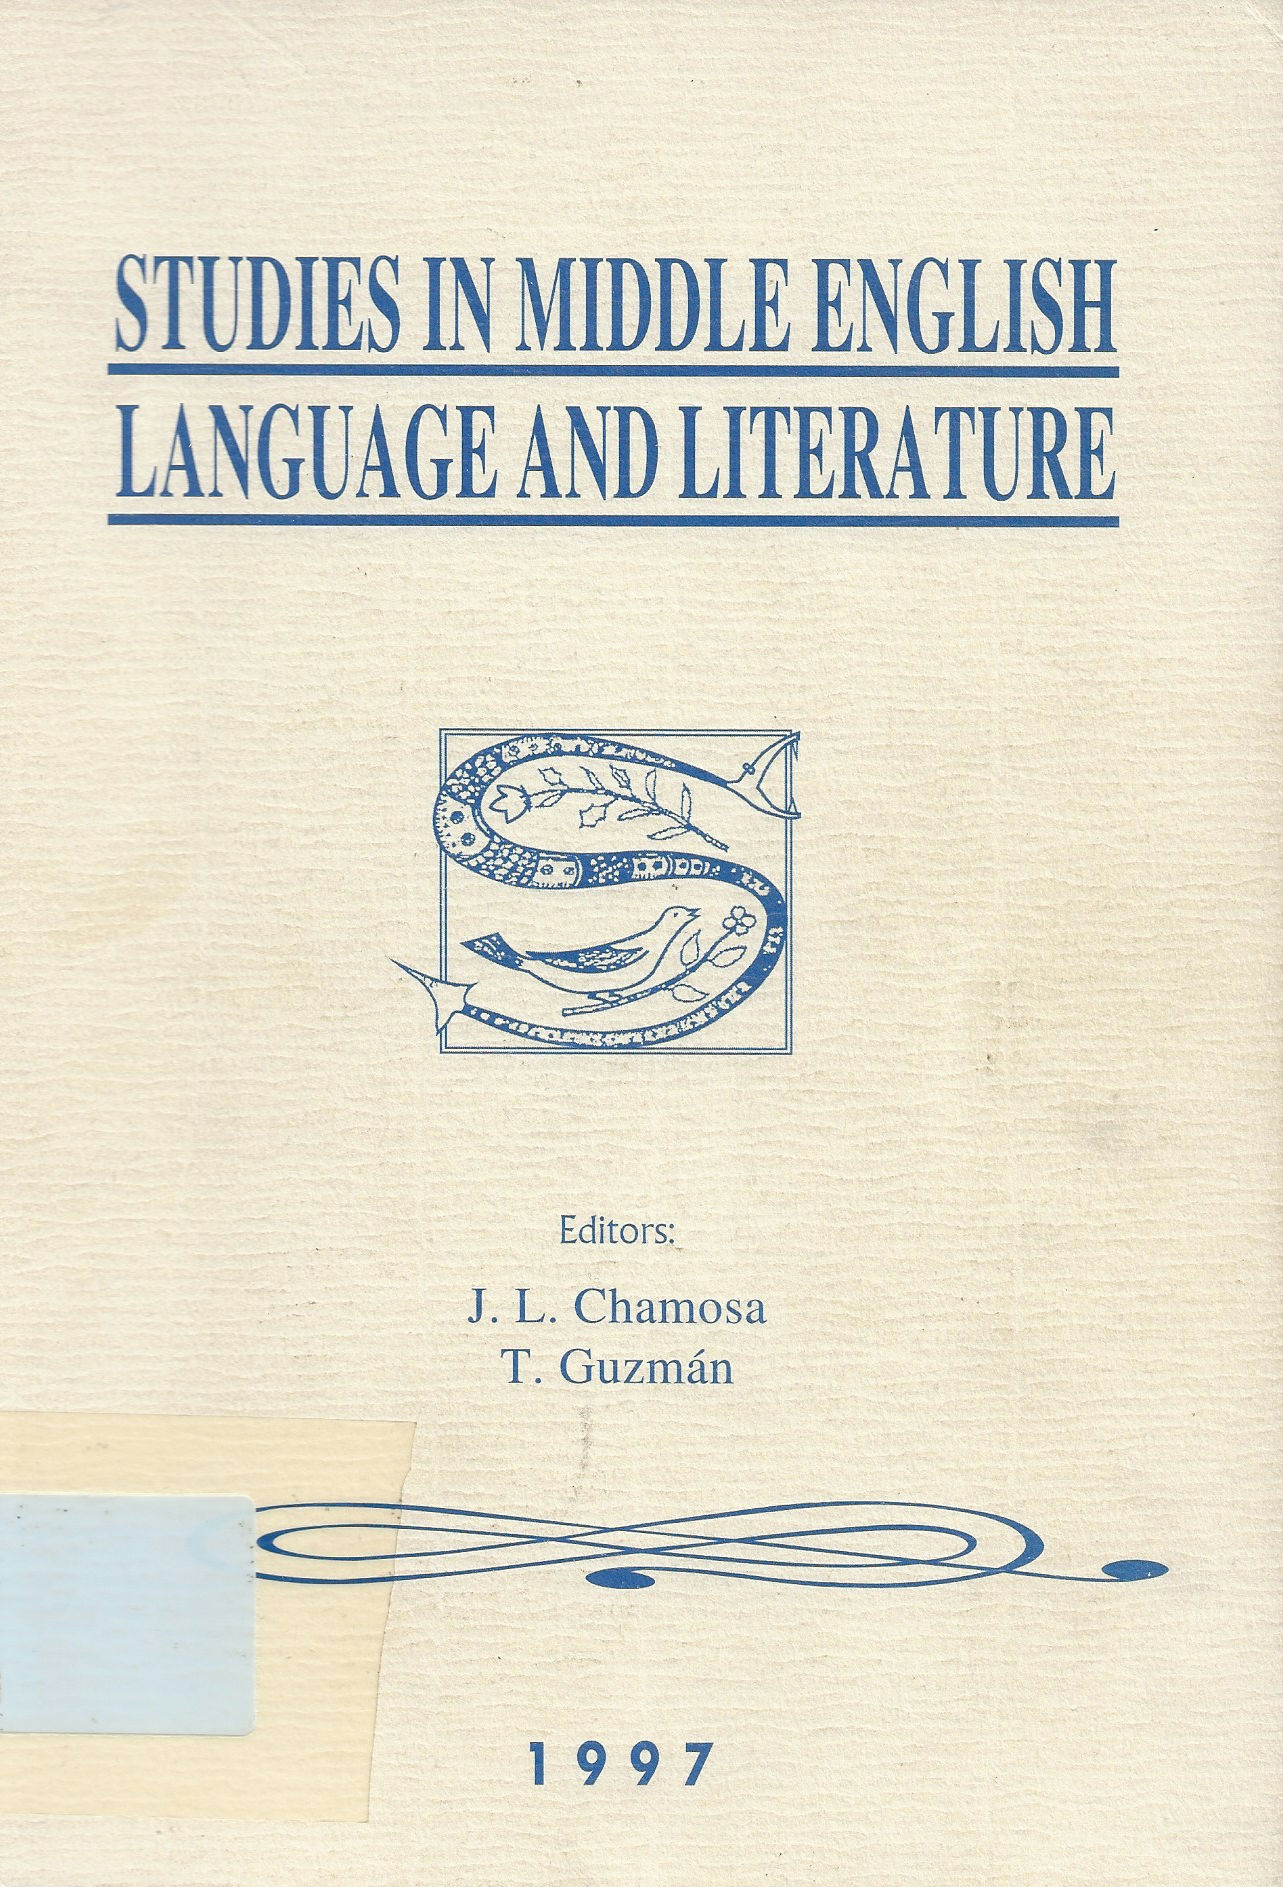 Imagen de portada del libro Studies in Middle English language and literature